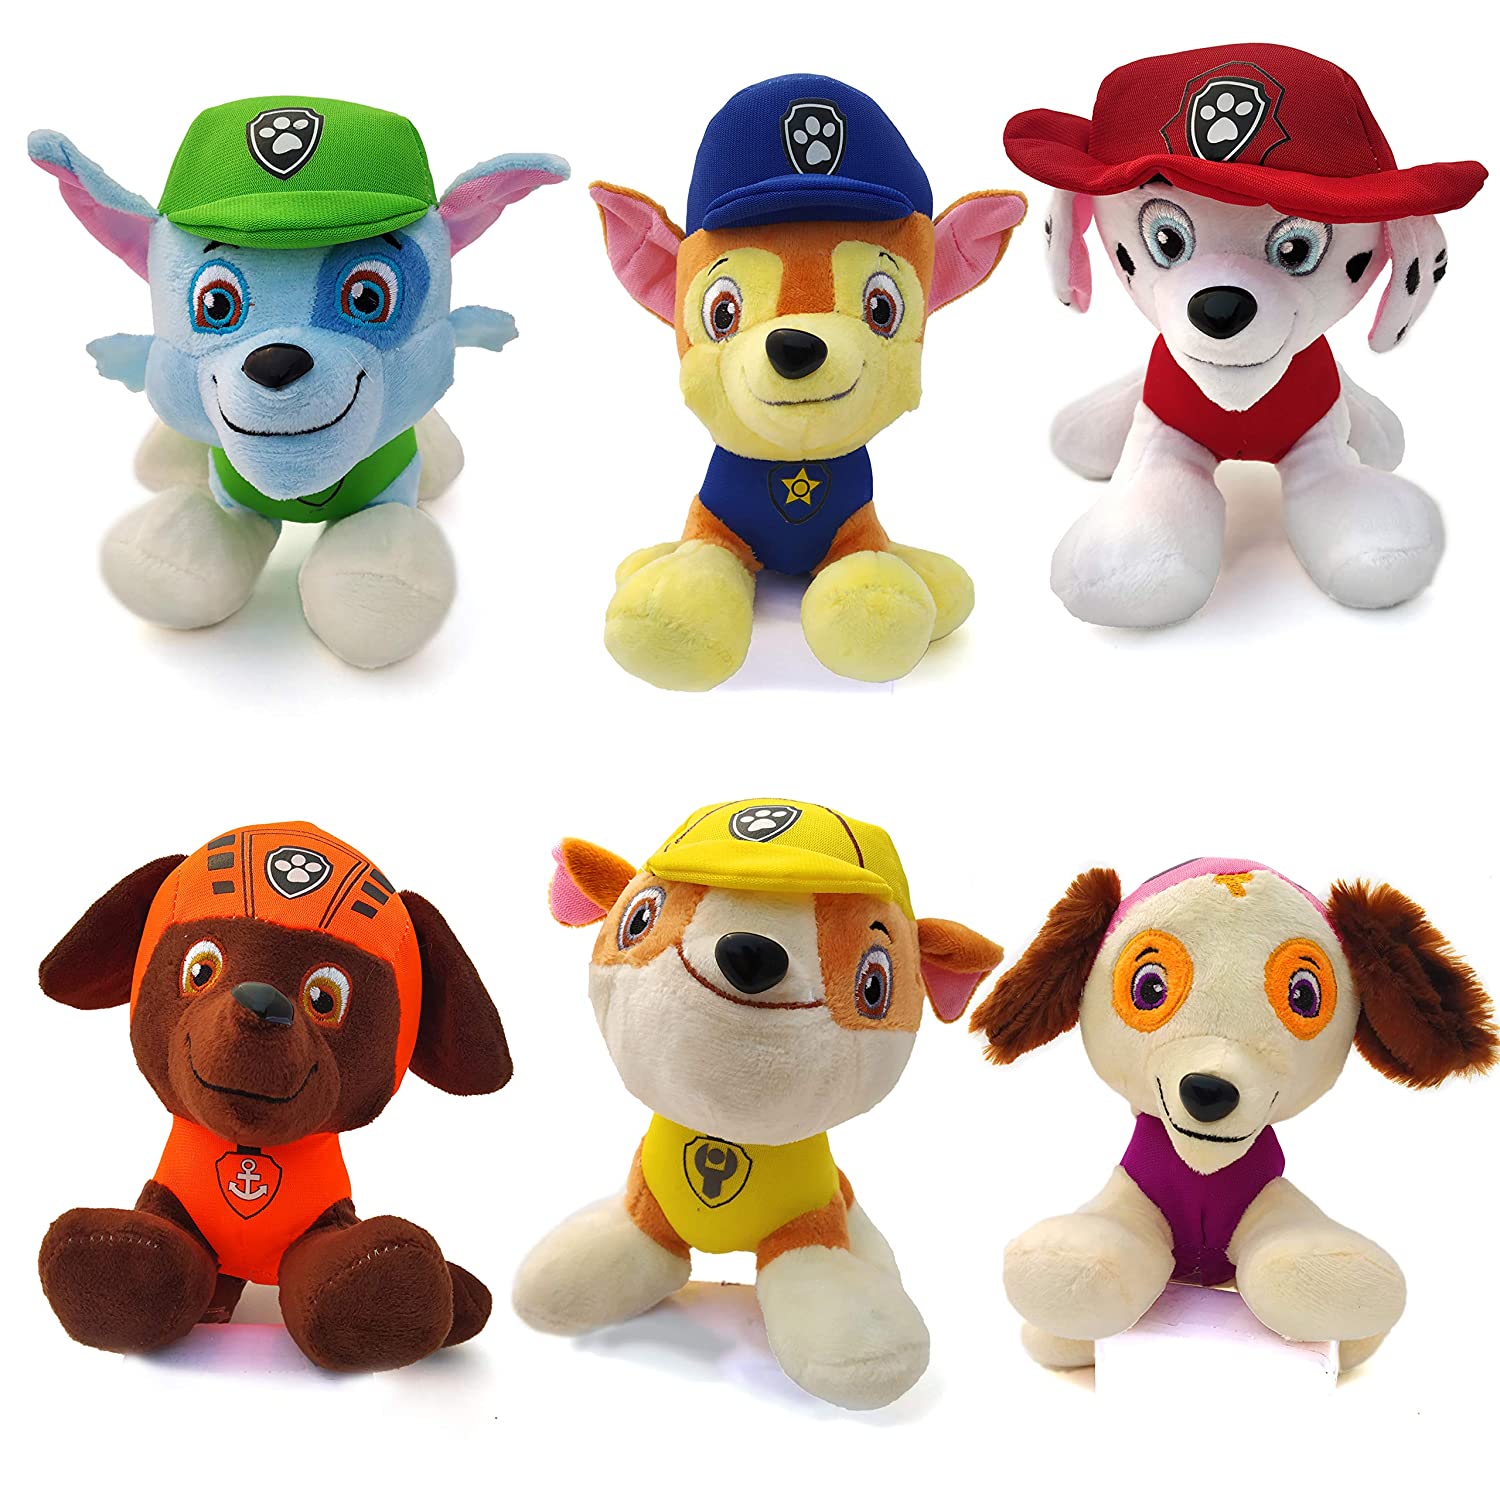 Buy Best Paw Patrol Dogs Soft Toys - 6 Pcs Plush Toy Set - Online India